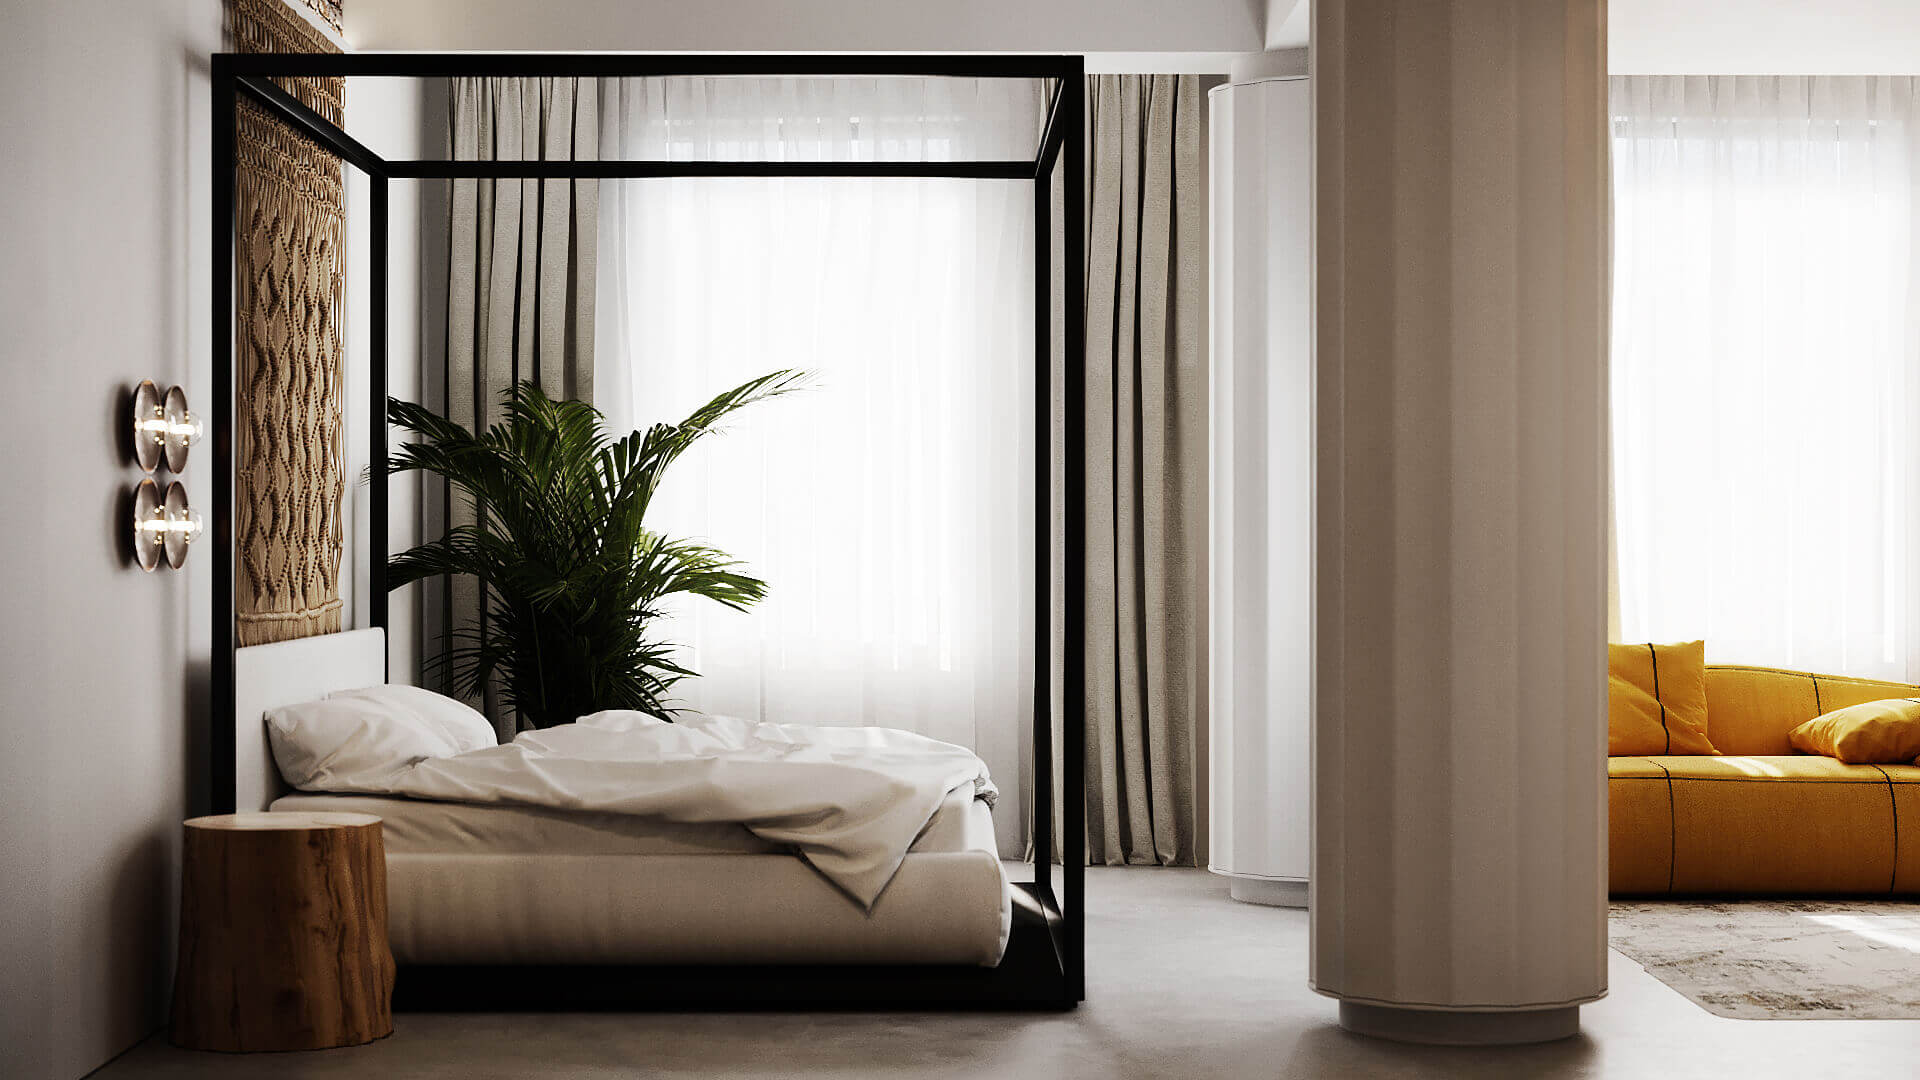 Oasis Apartment bedroom design - cgi visualization